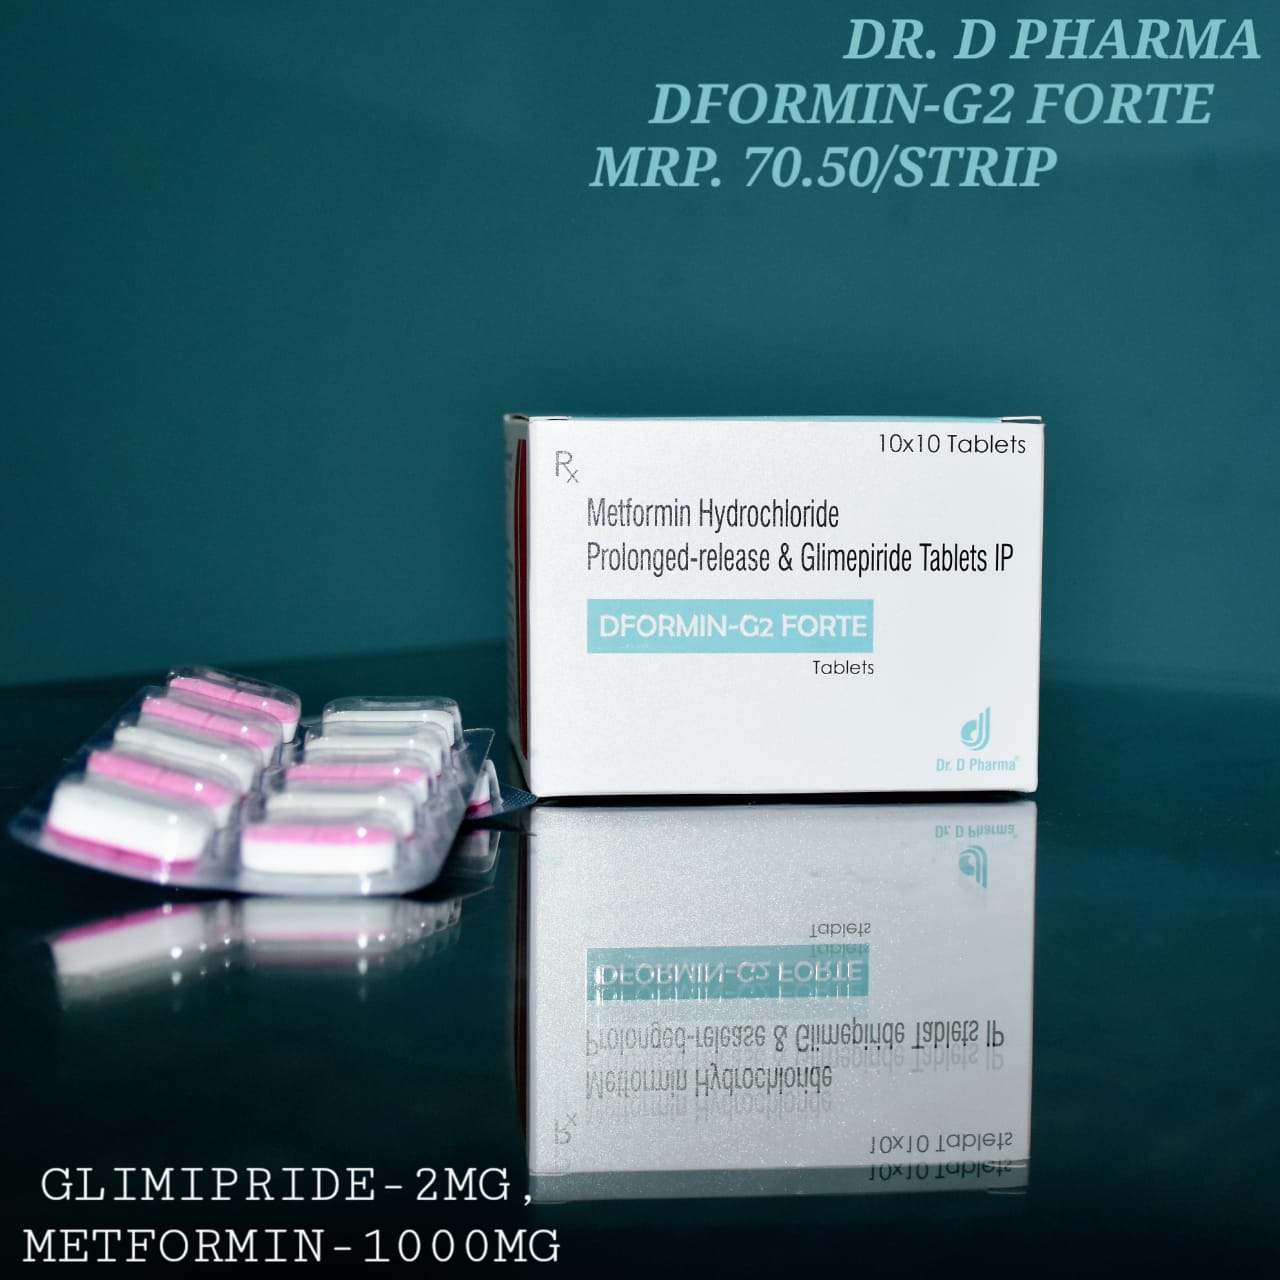 Metformin Hydrochloride Prolonged-release & Gimepride Tablets IP